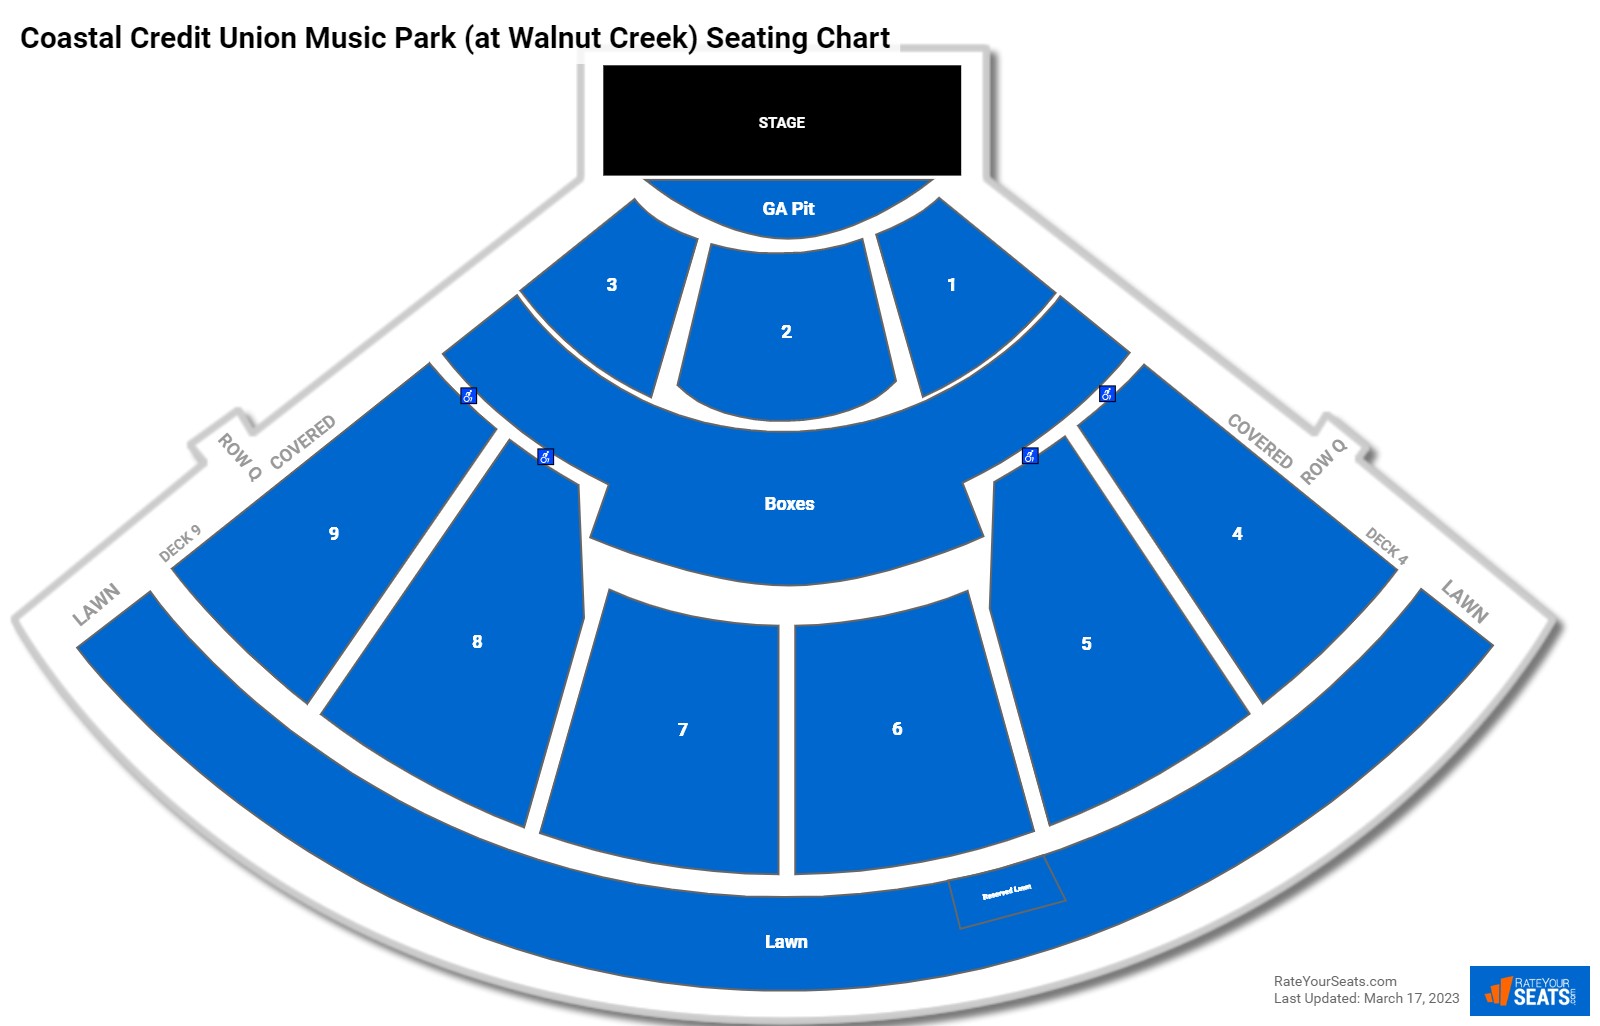 Coastal Credit Union Music Park (at Walnut Creek) Concert Seating Chart